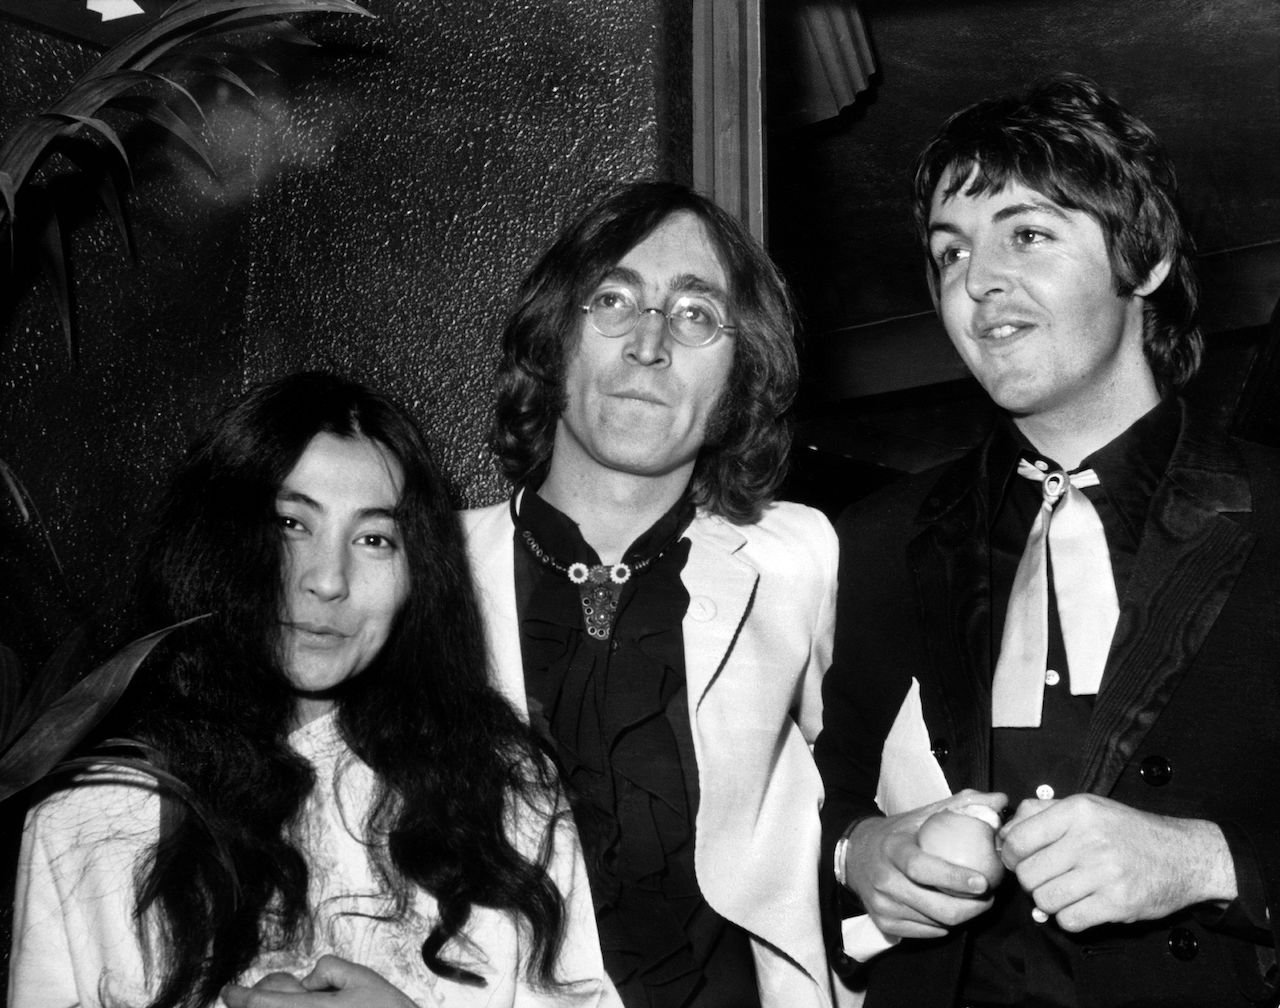 (L-R) Yoko Ono, John Lennon, and Paul McCartney at the premiere of "Yellow Submarine"